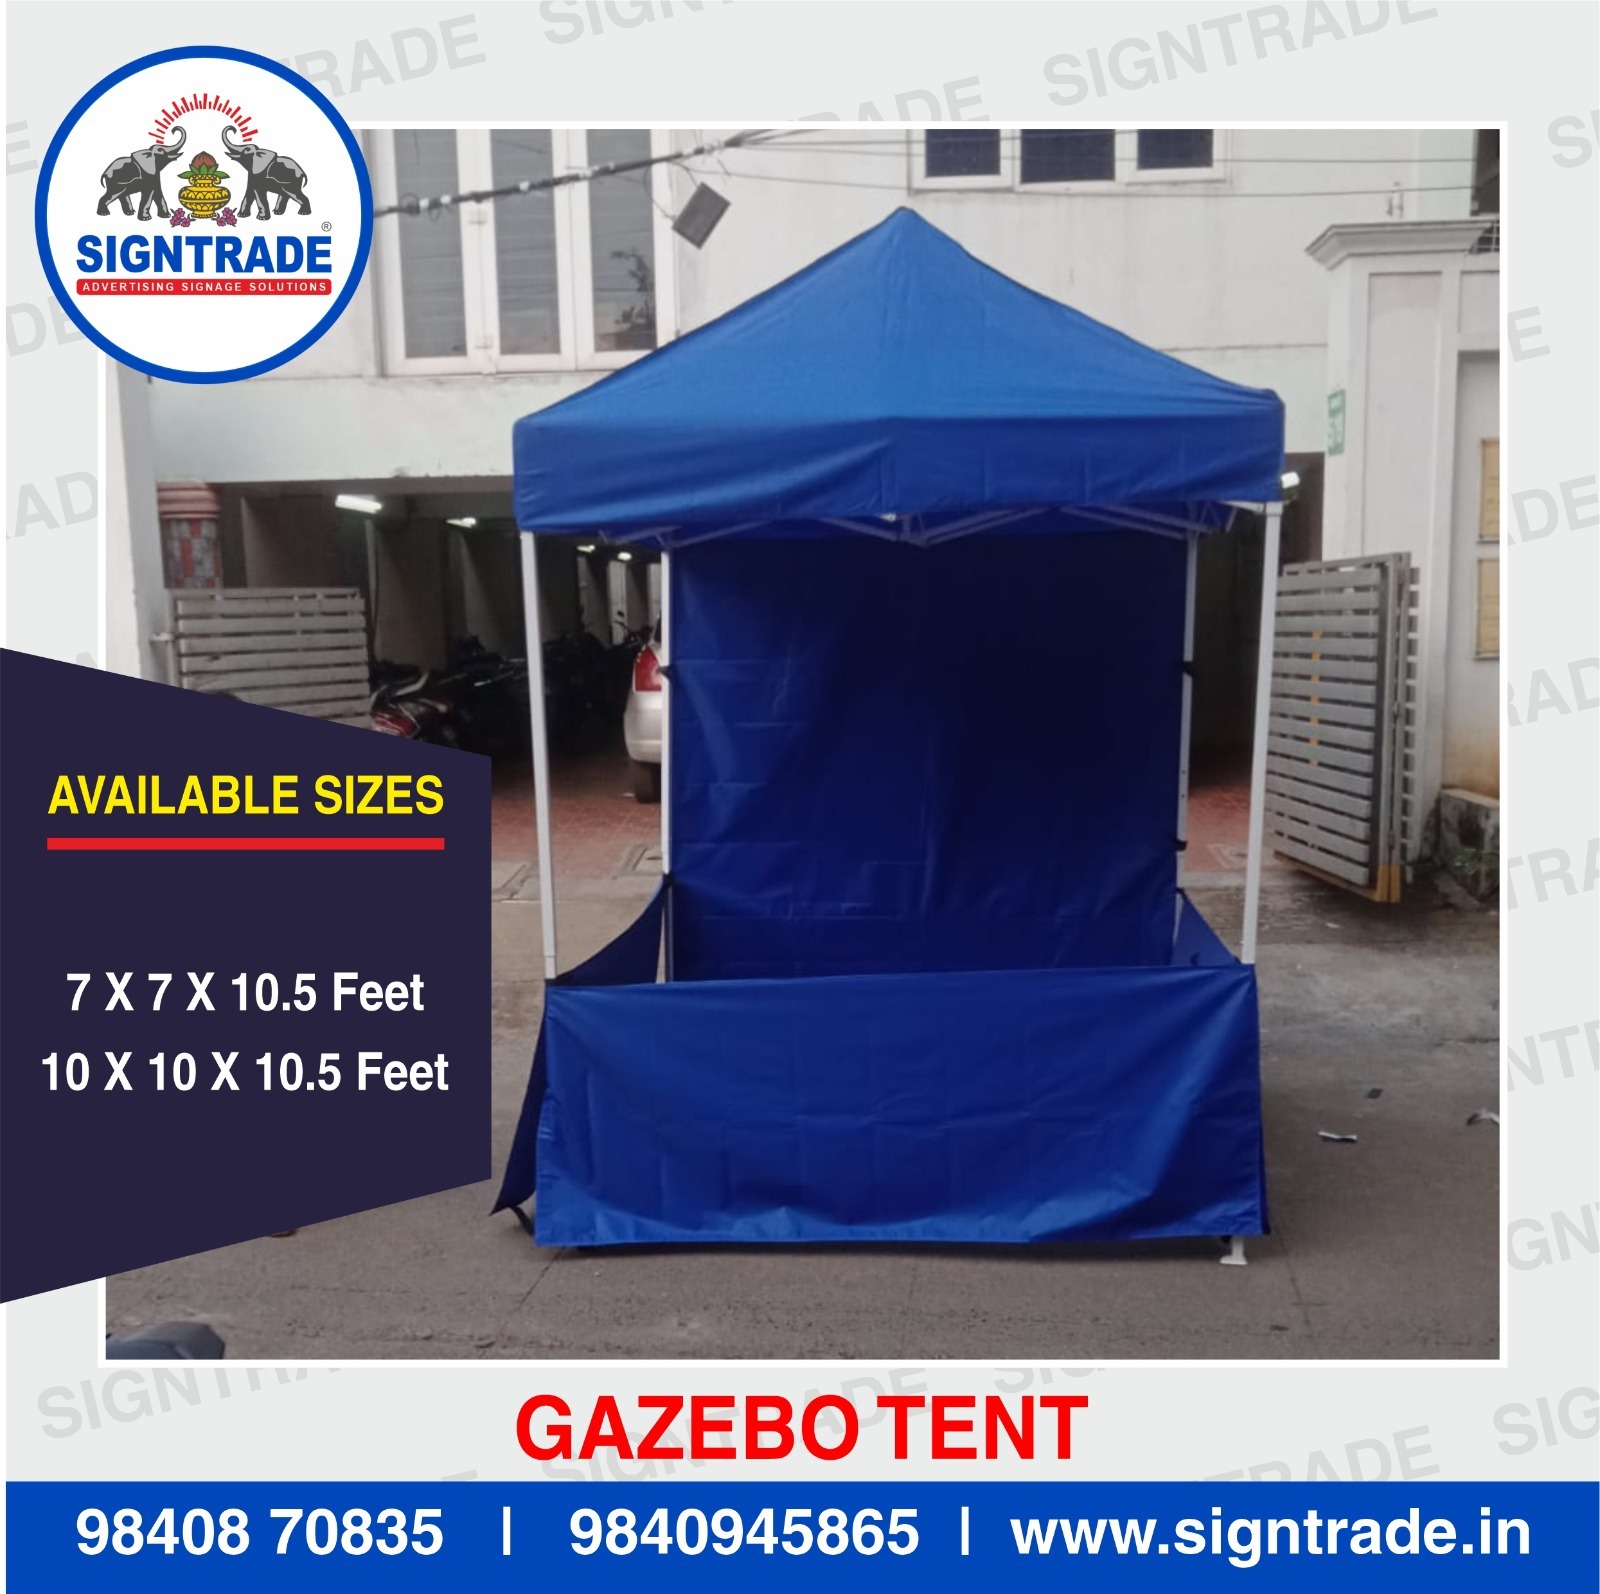 Gazebo tent size 7x7x10.5 feet in Chennai